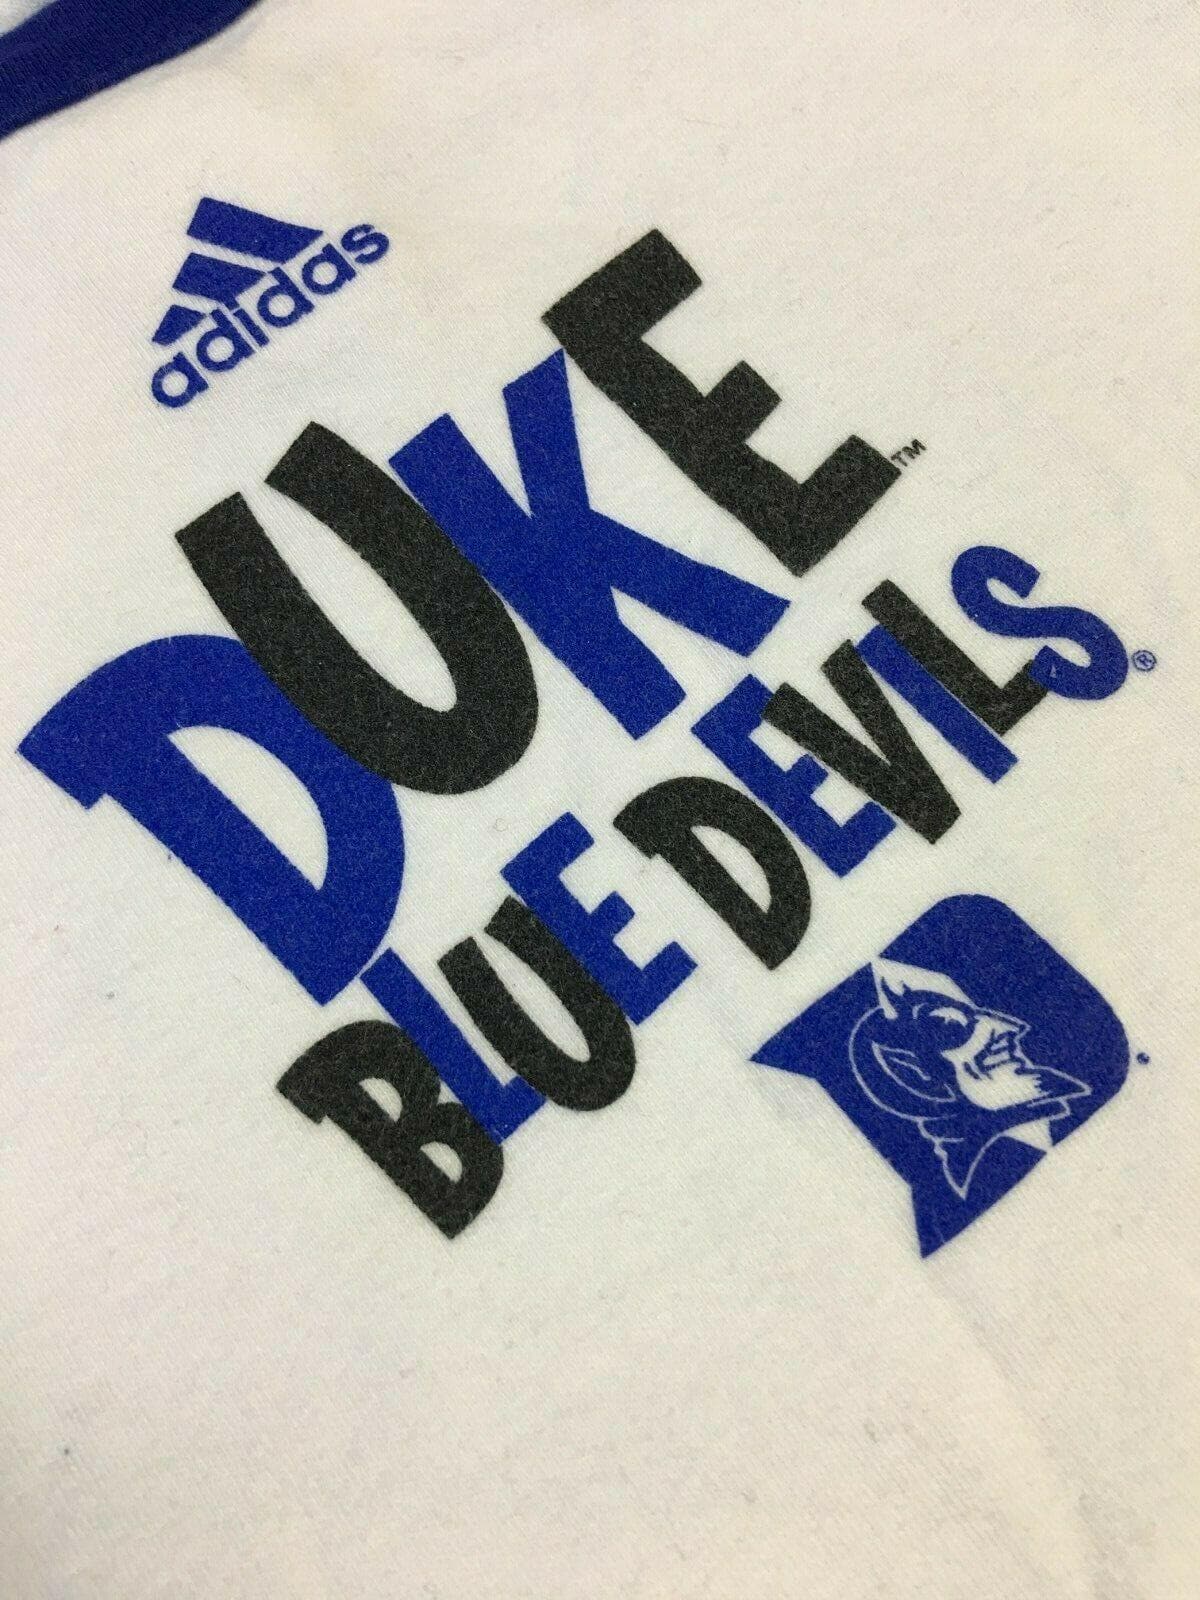 NCAA Duke Blue Devils Adidas Bodysuit/Vest 12 Months